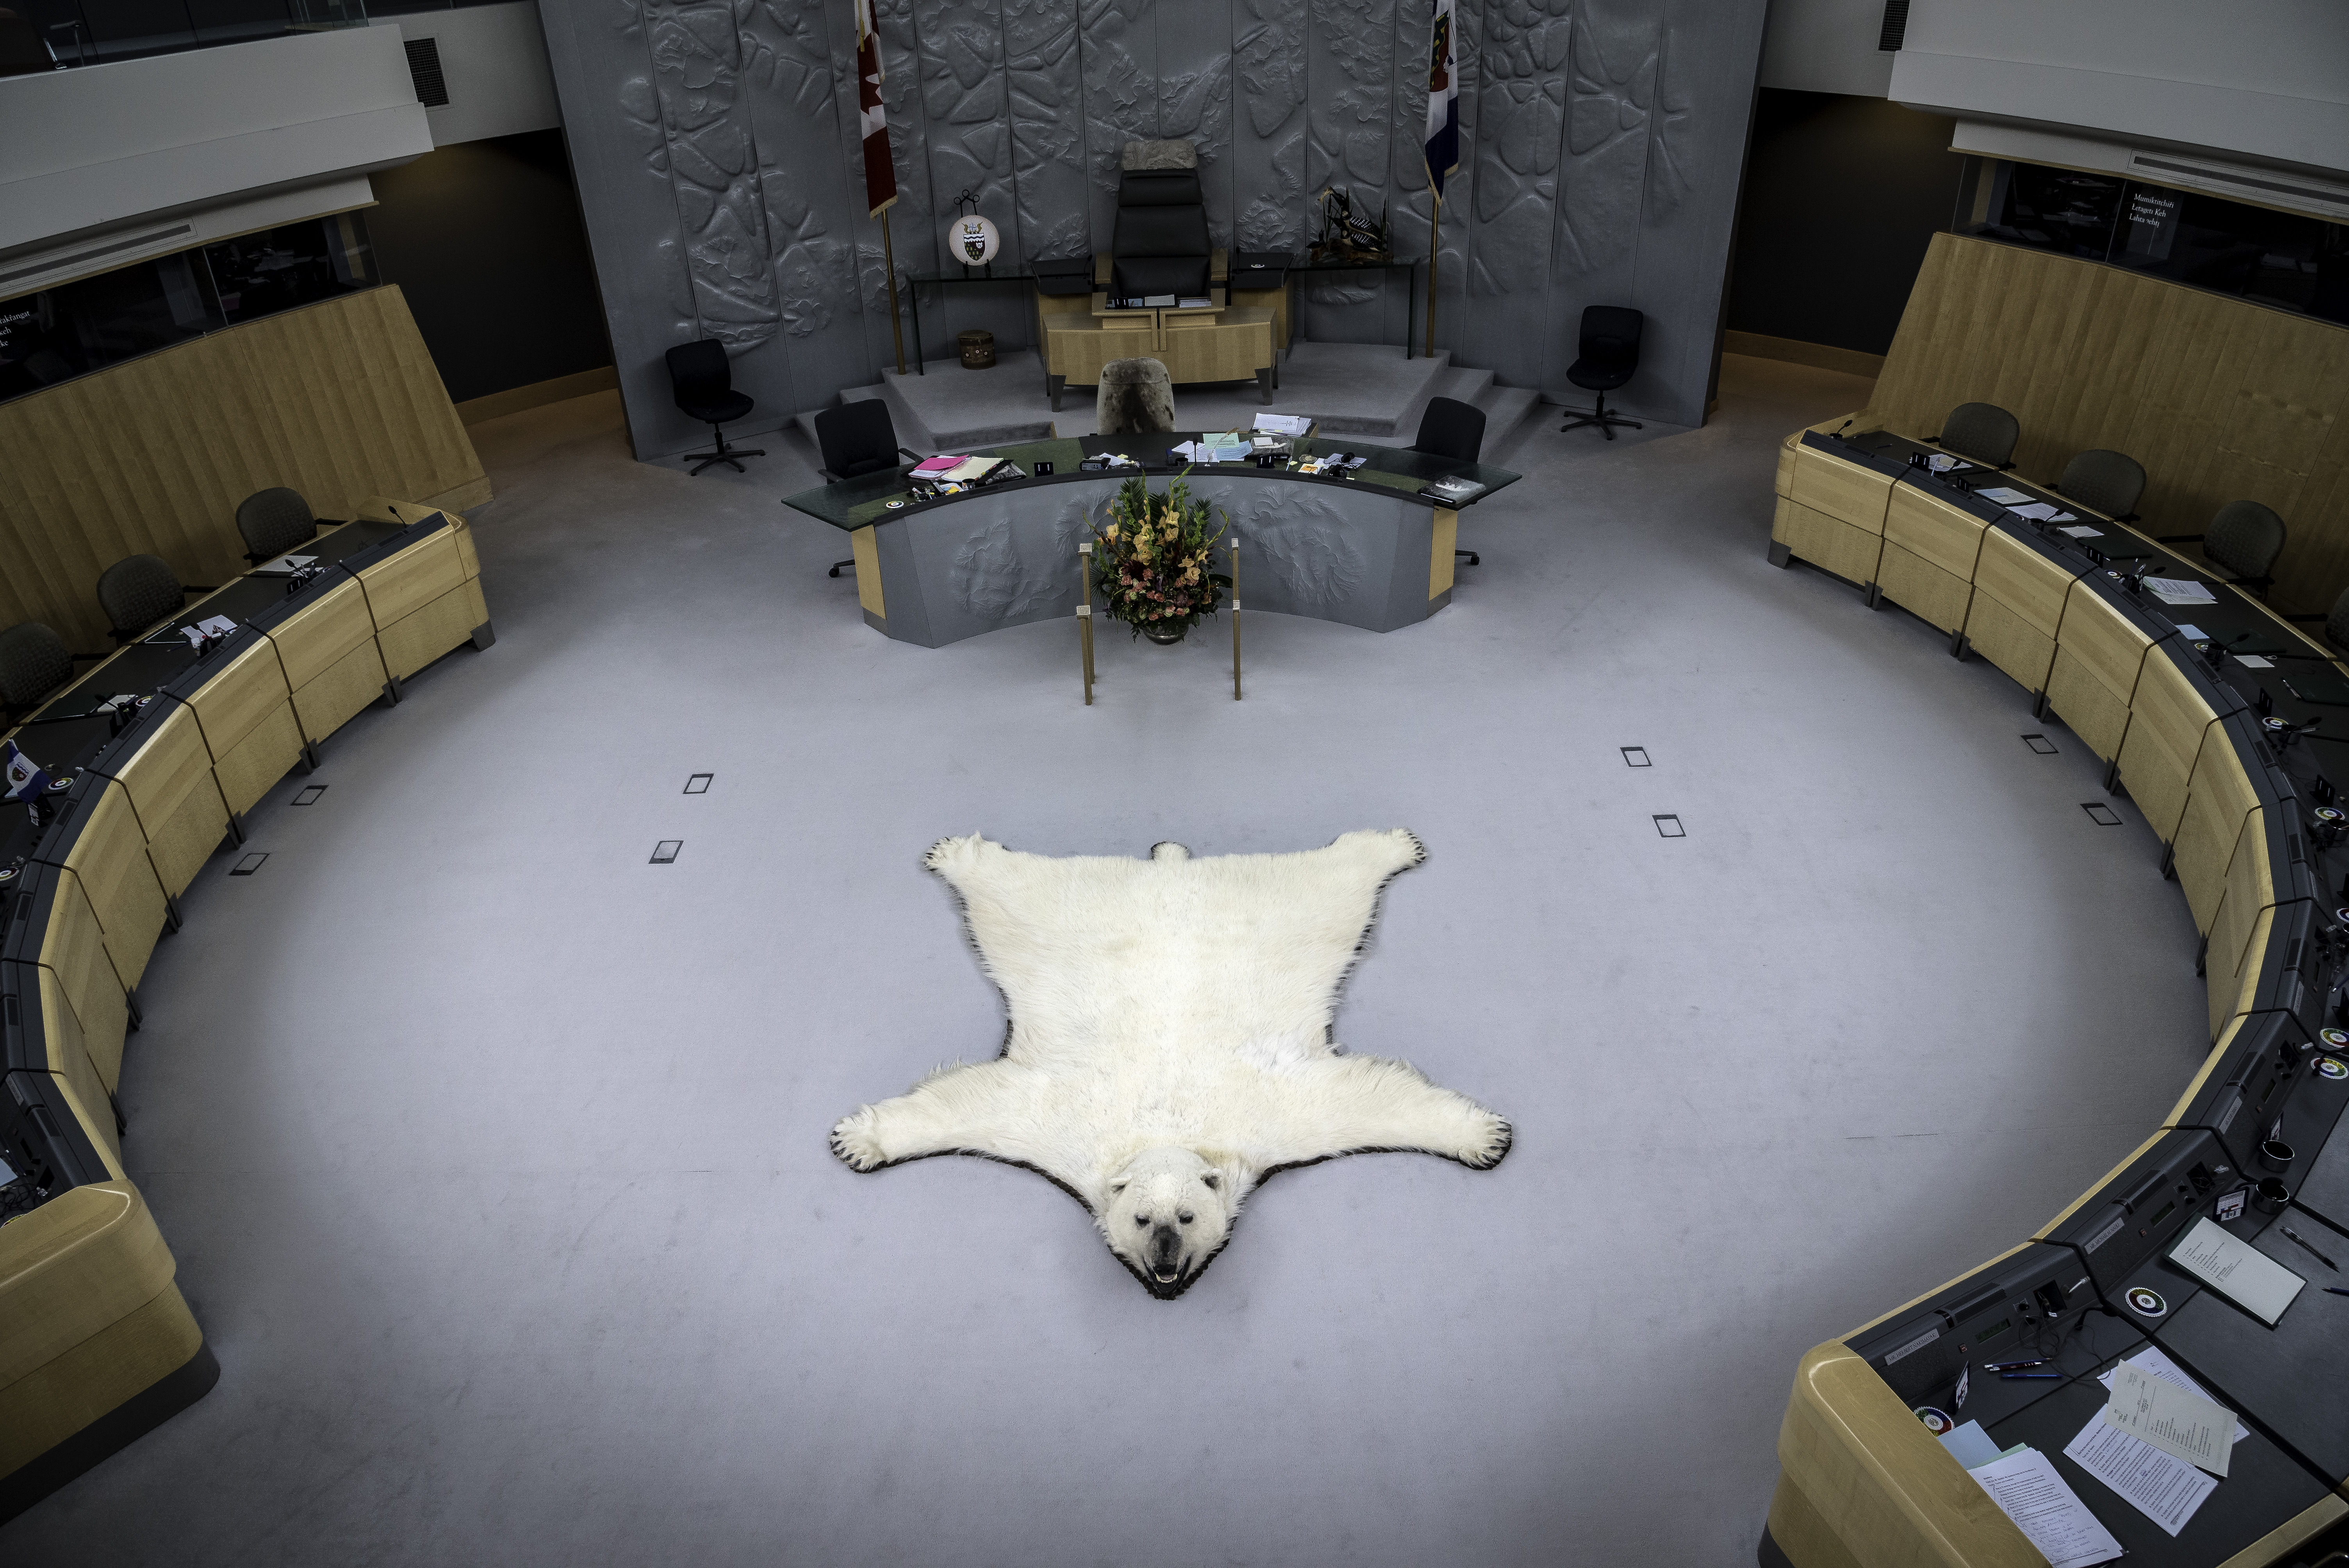 Polar Bear Rug in the Congress Room in Yellowknife image - Free stock photo - Public Domain ...